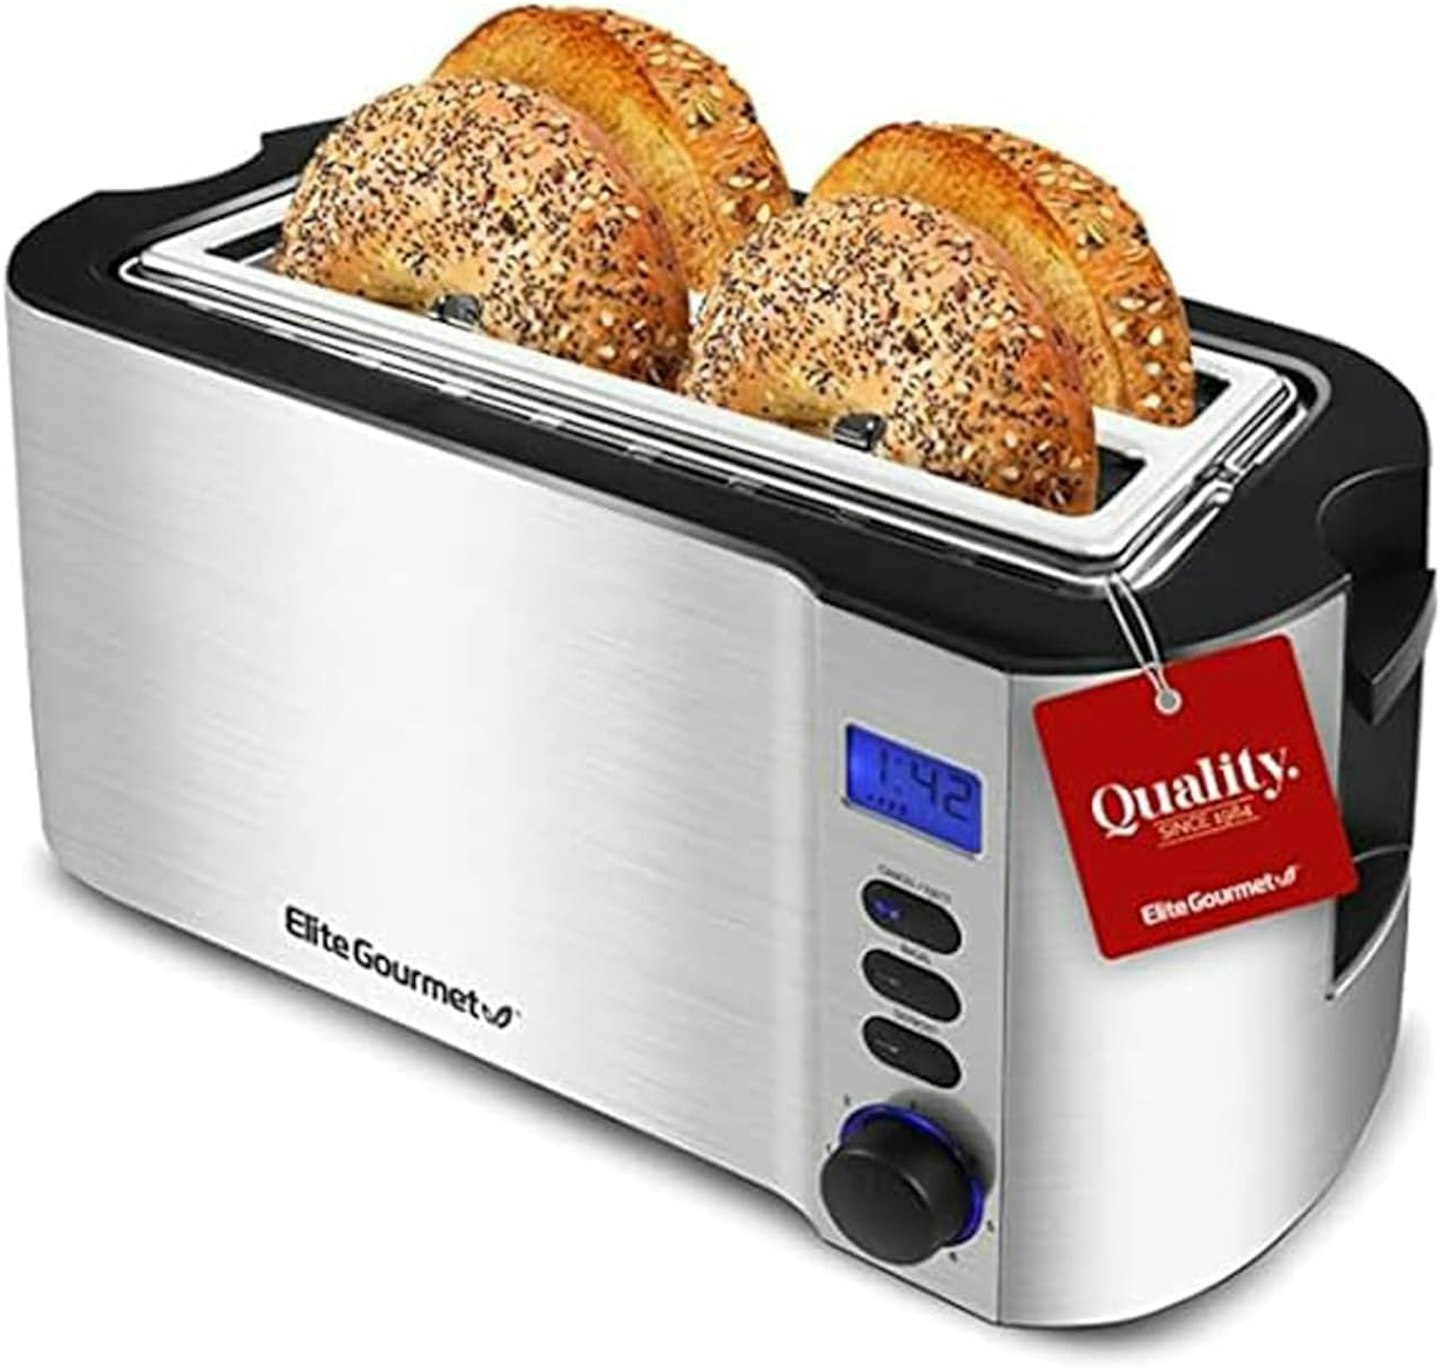 Elite Gourmet - best energy-efficient toaster 